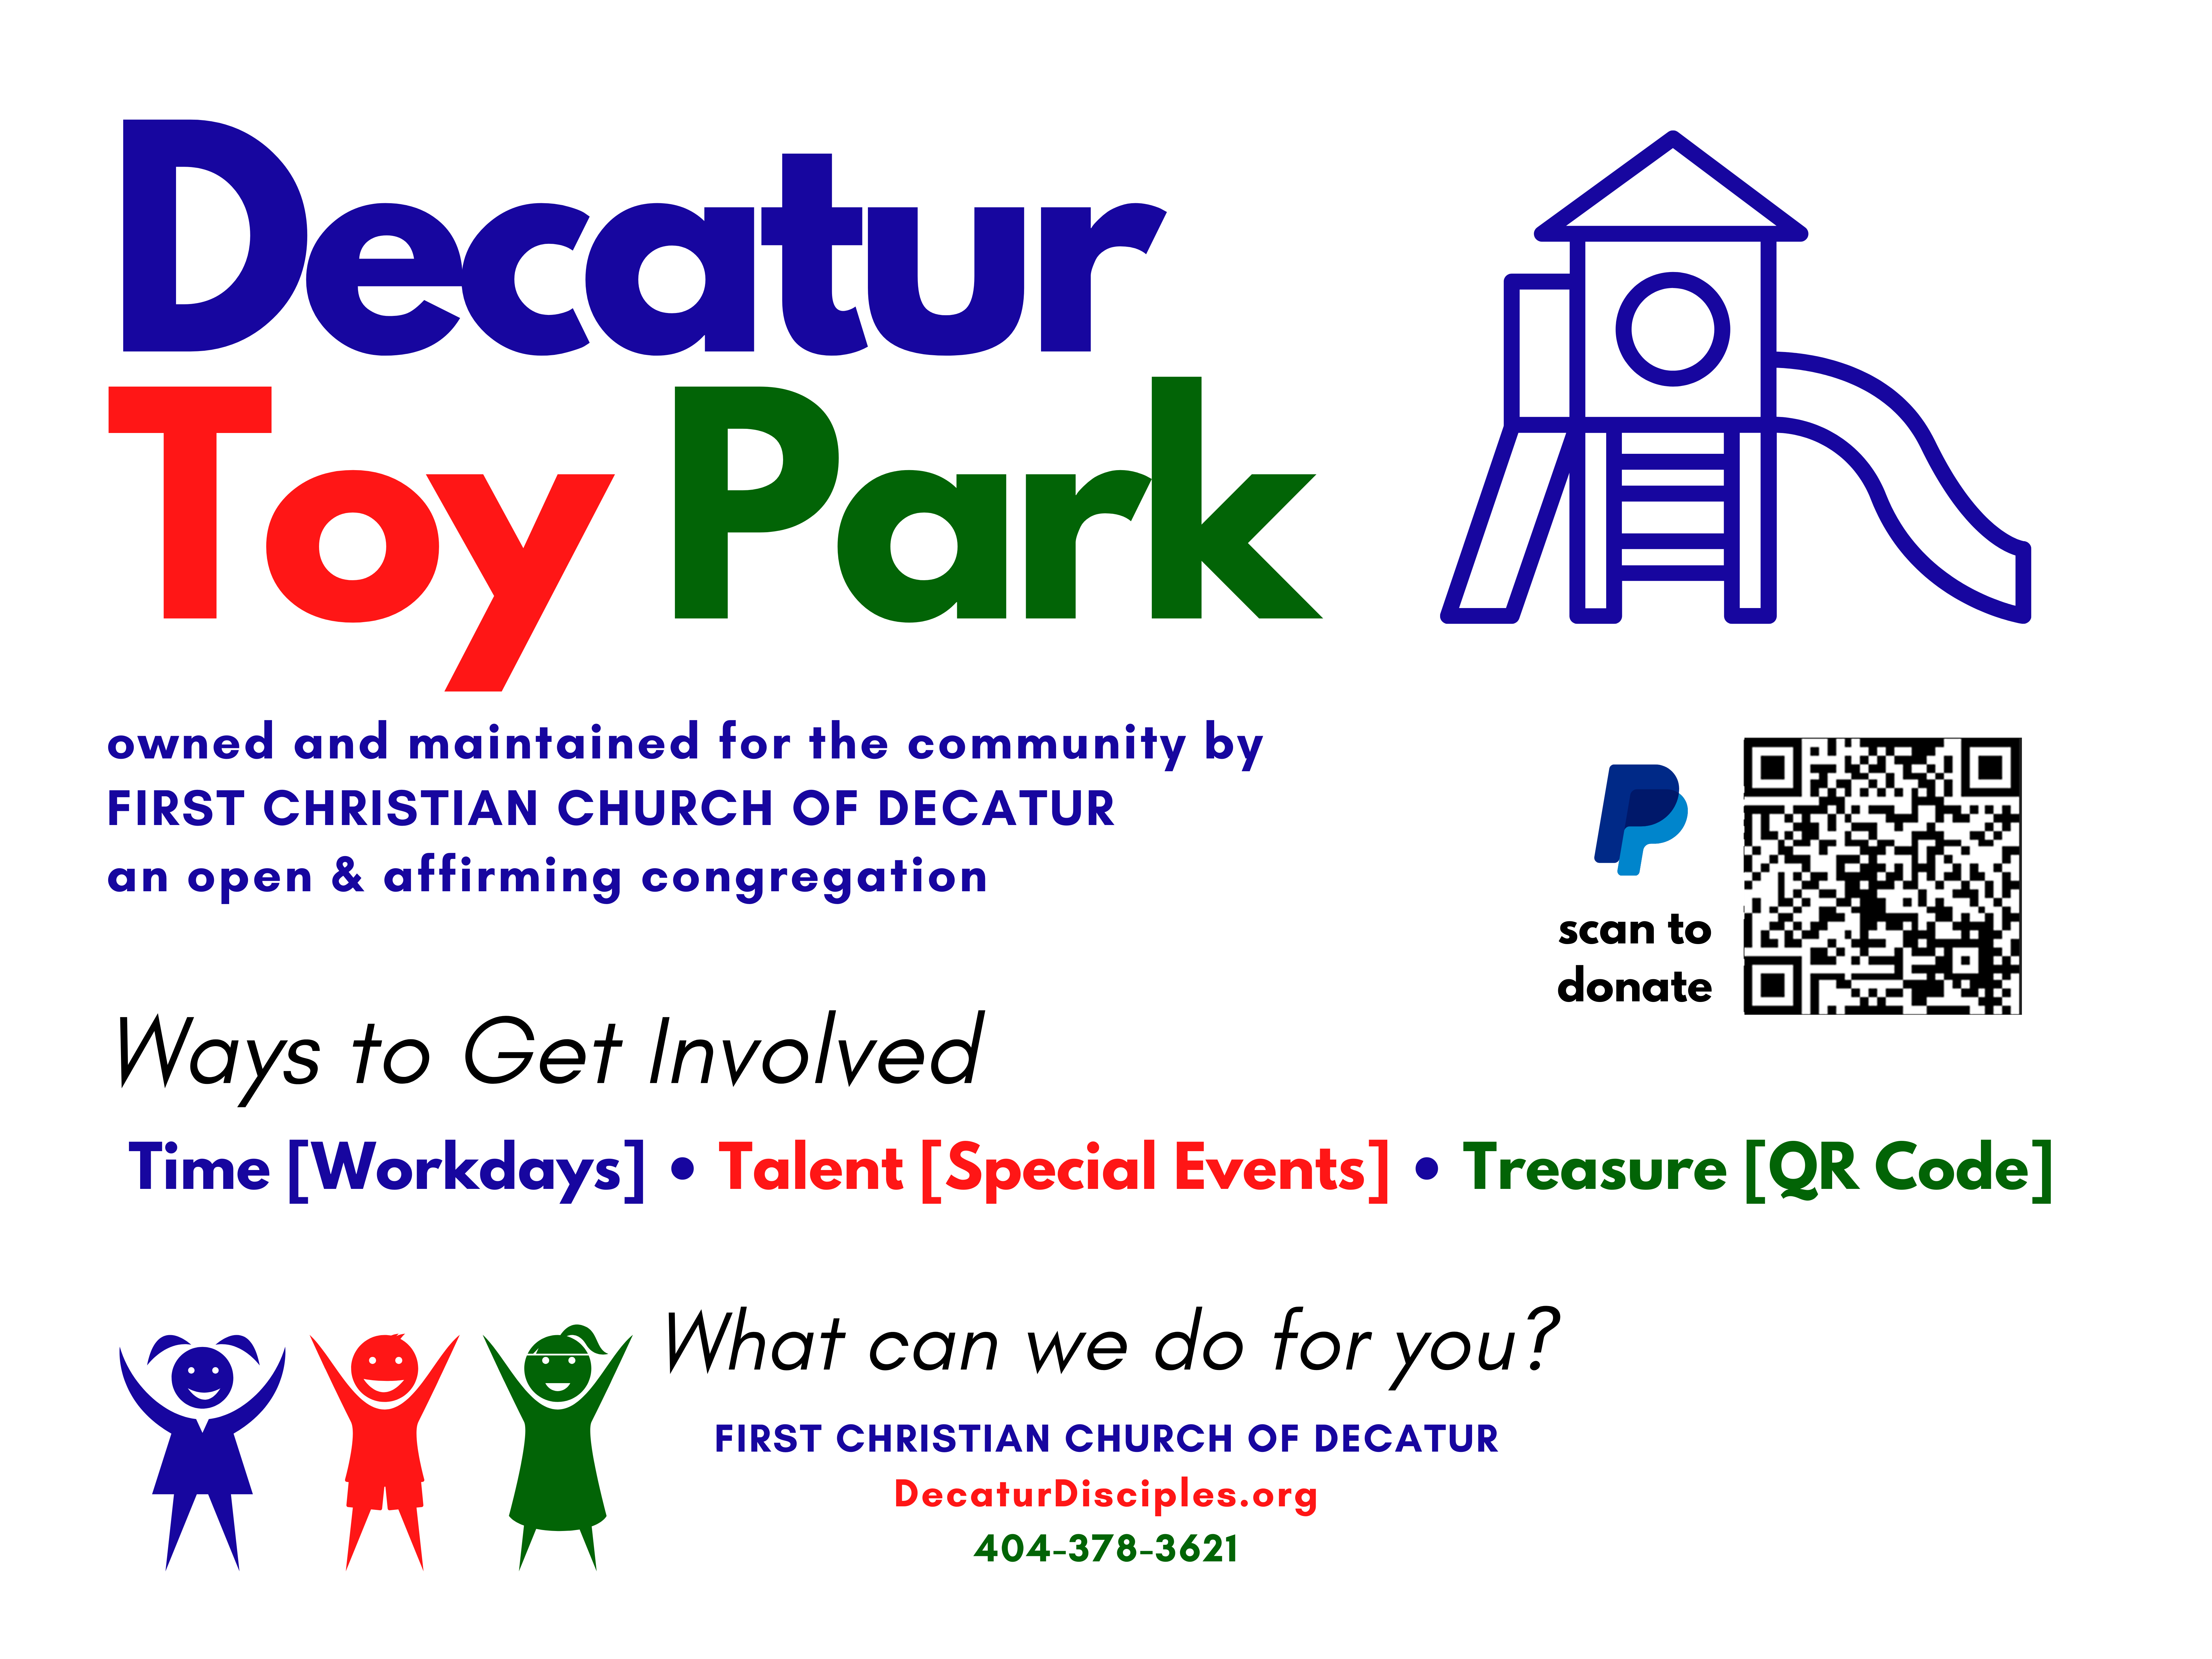 http://www.decaturdisciples.org/wp-content/uploads/2022/11/Decatur-Toy-Park-yard-sign.png